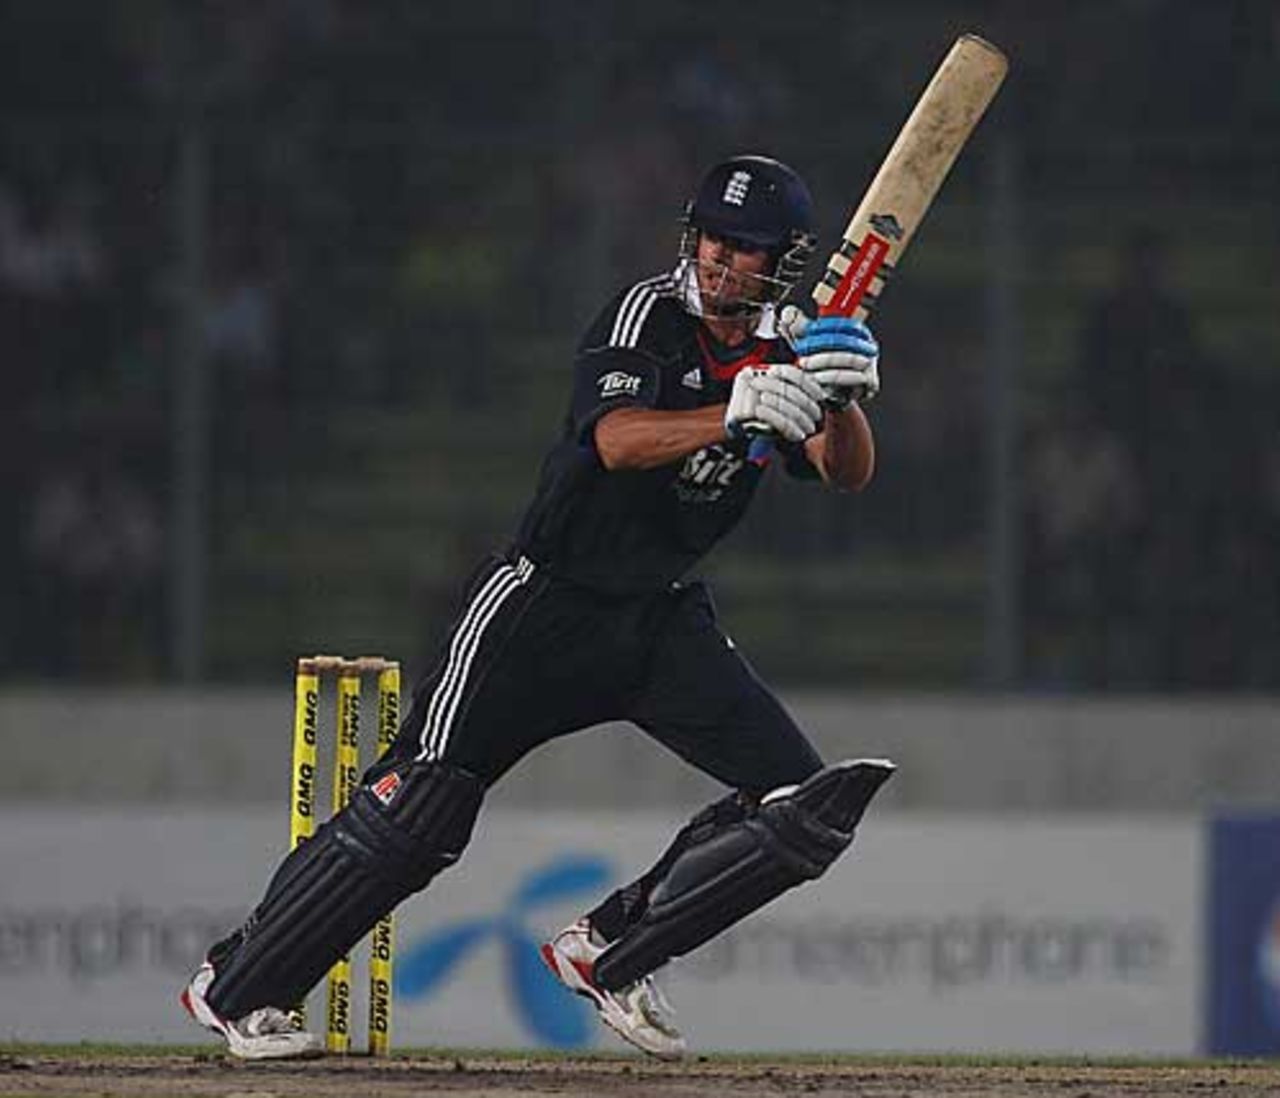 Alastair Cook again showed good form with 60, Bangladesh v England, 2nd ODI, Dhaka, March 2, 2010